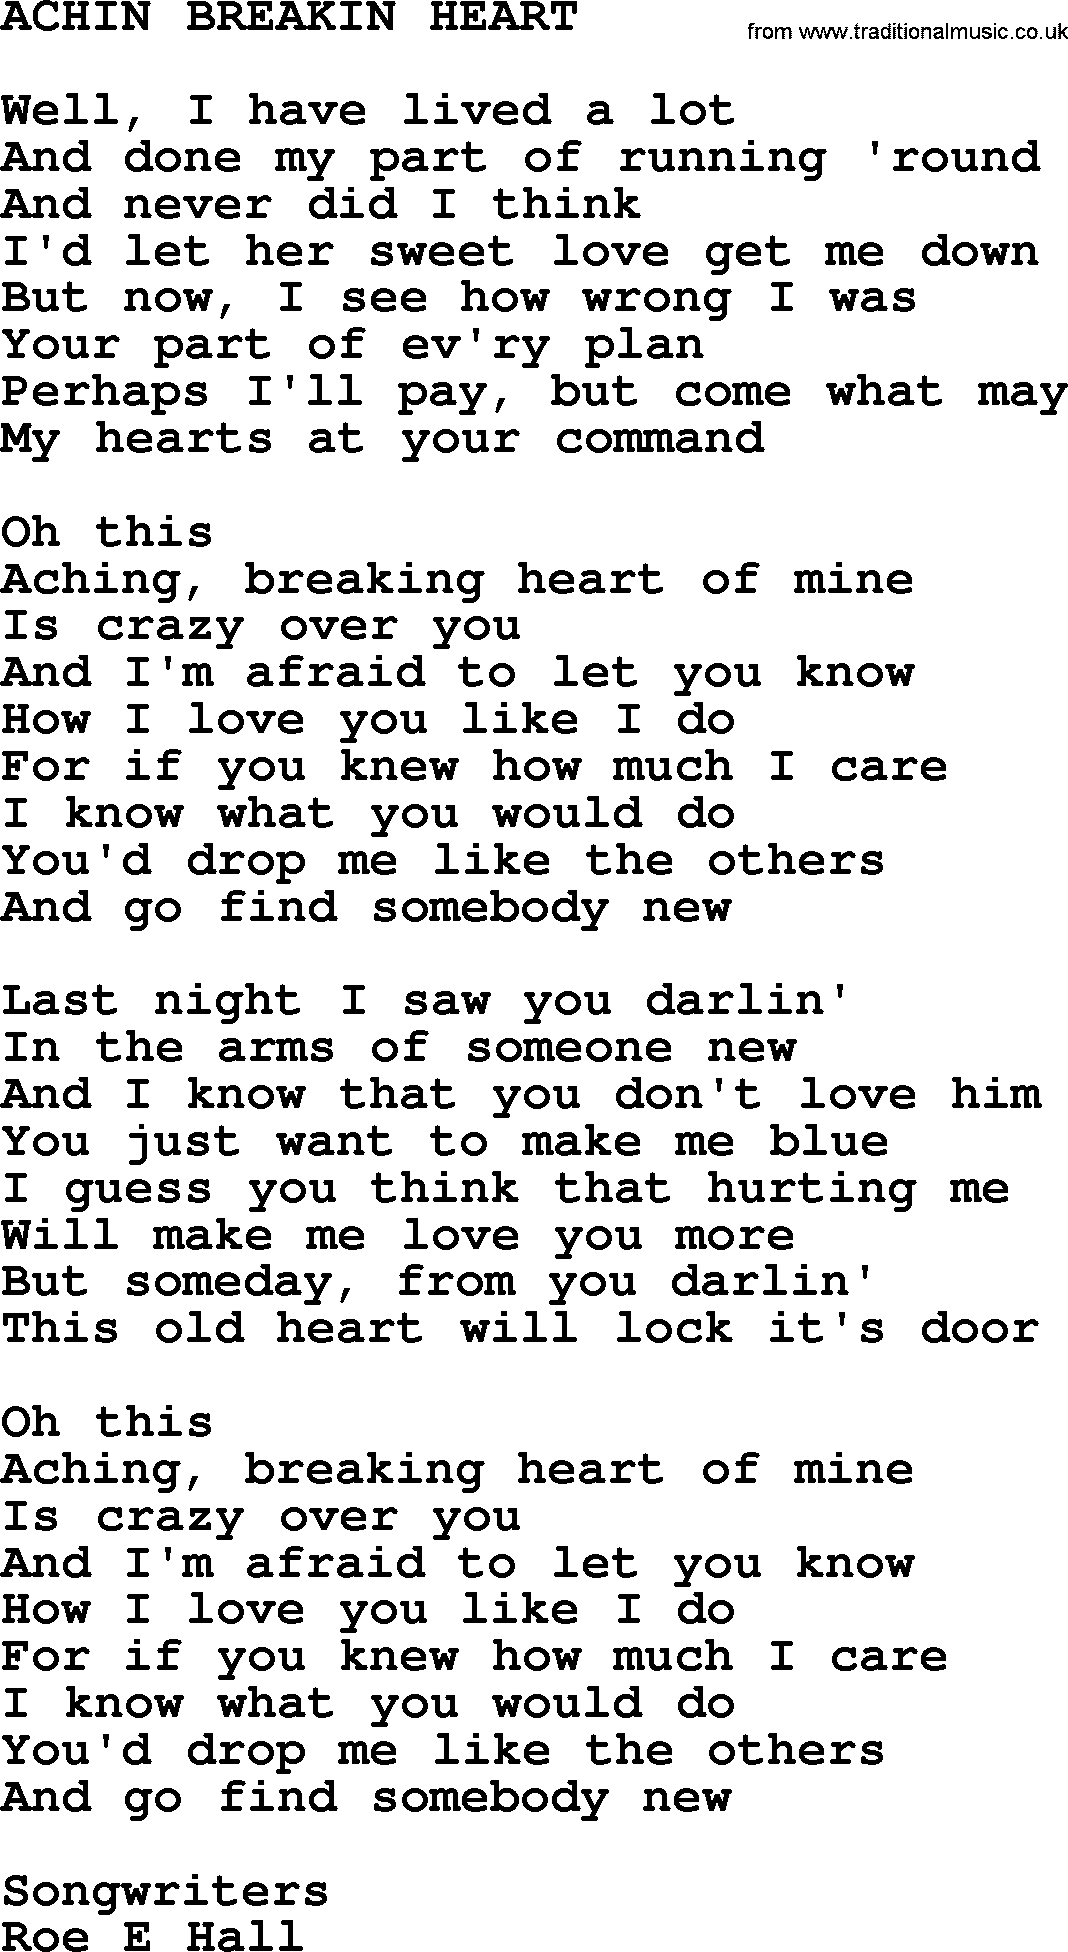 George Jones song: Achin Breakin Heart, lyrics